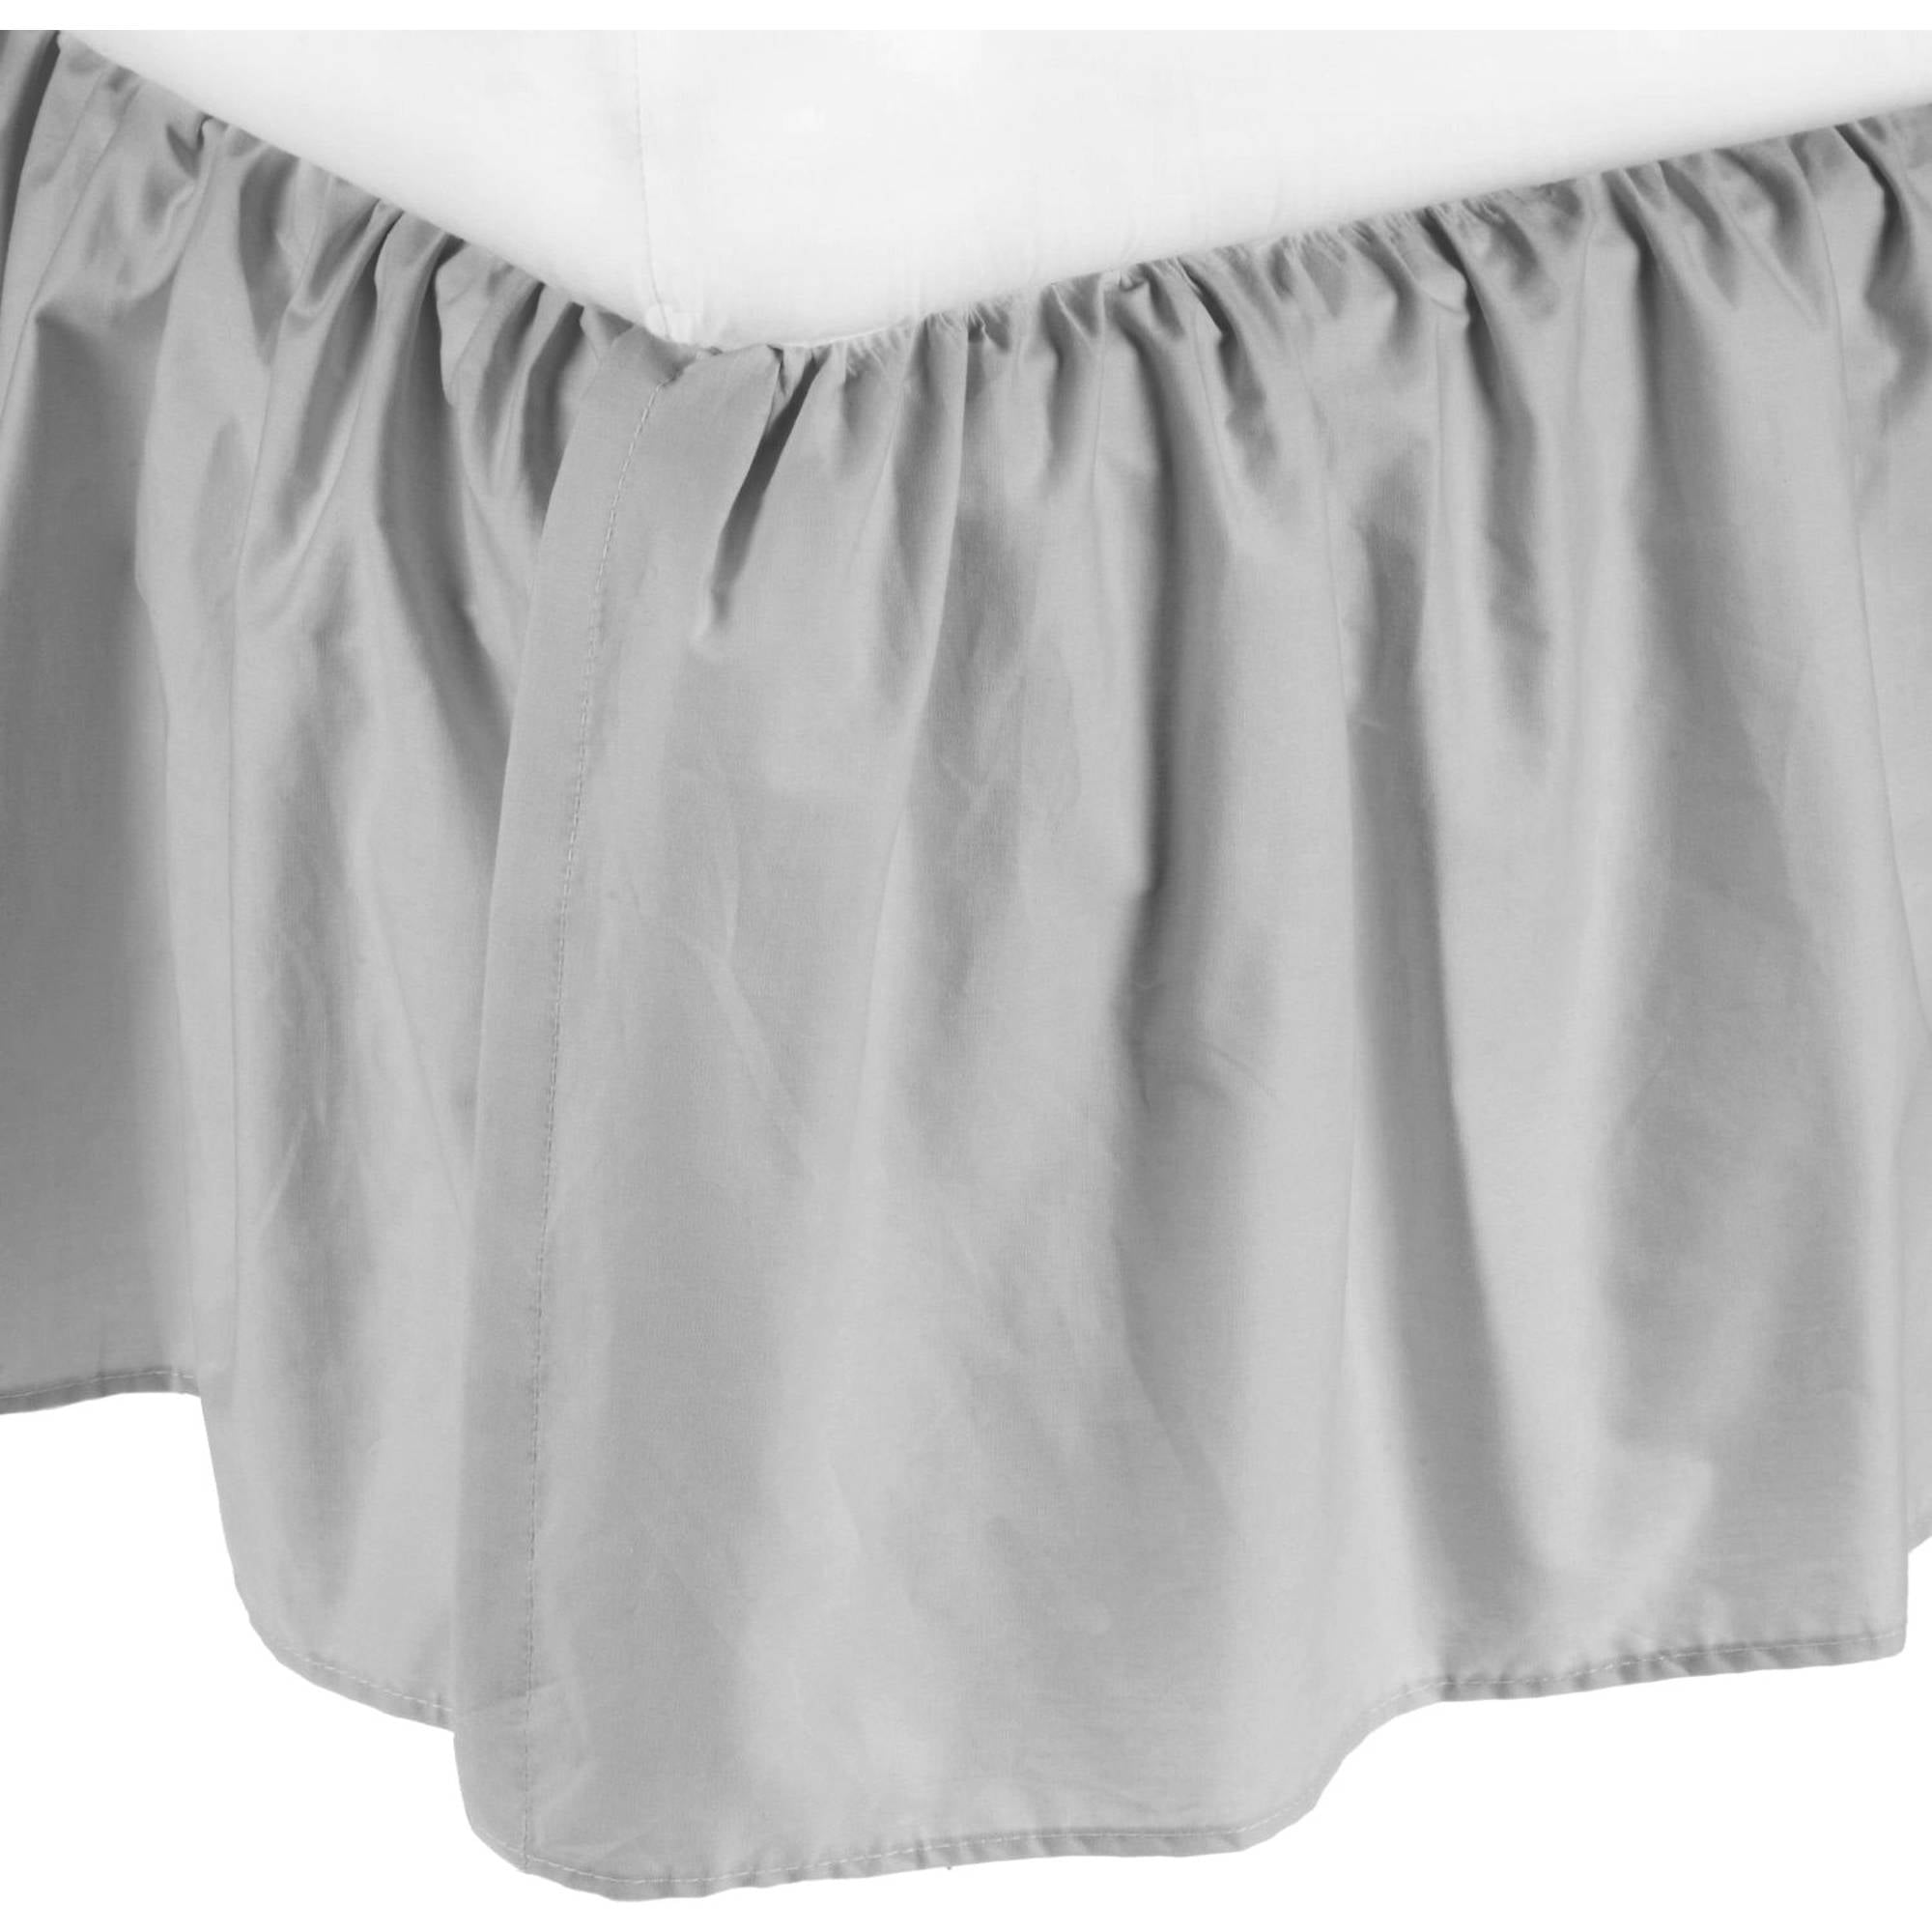 100% Natural Cotton-Nursery Crib-Toddler Bedding Skirt for Baby Girls or Boys 14 Drop.Taupe Crib Skirt Dust Ruffle 